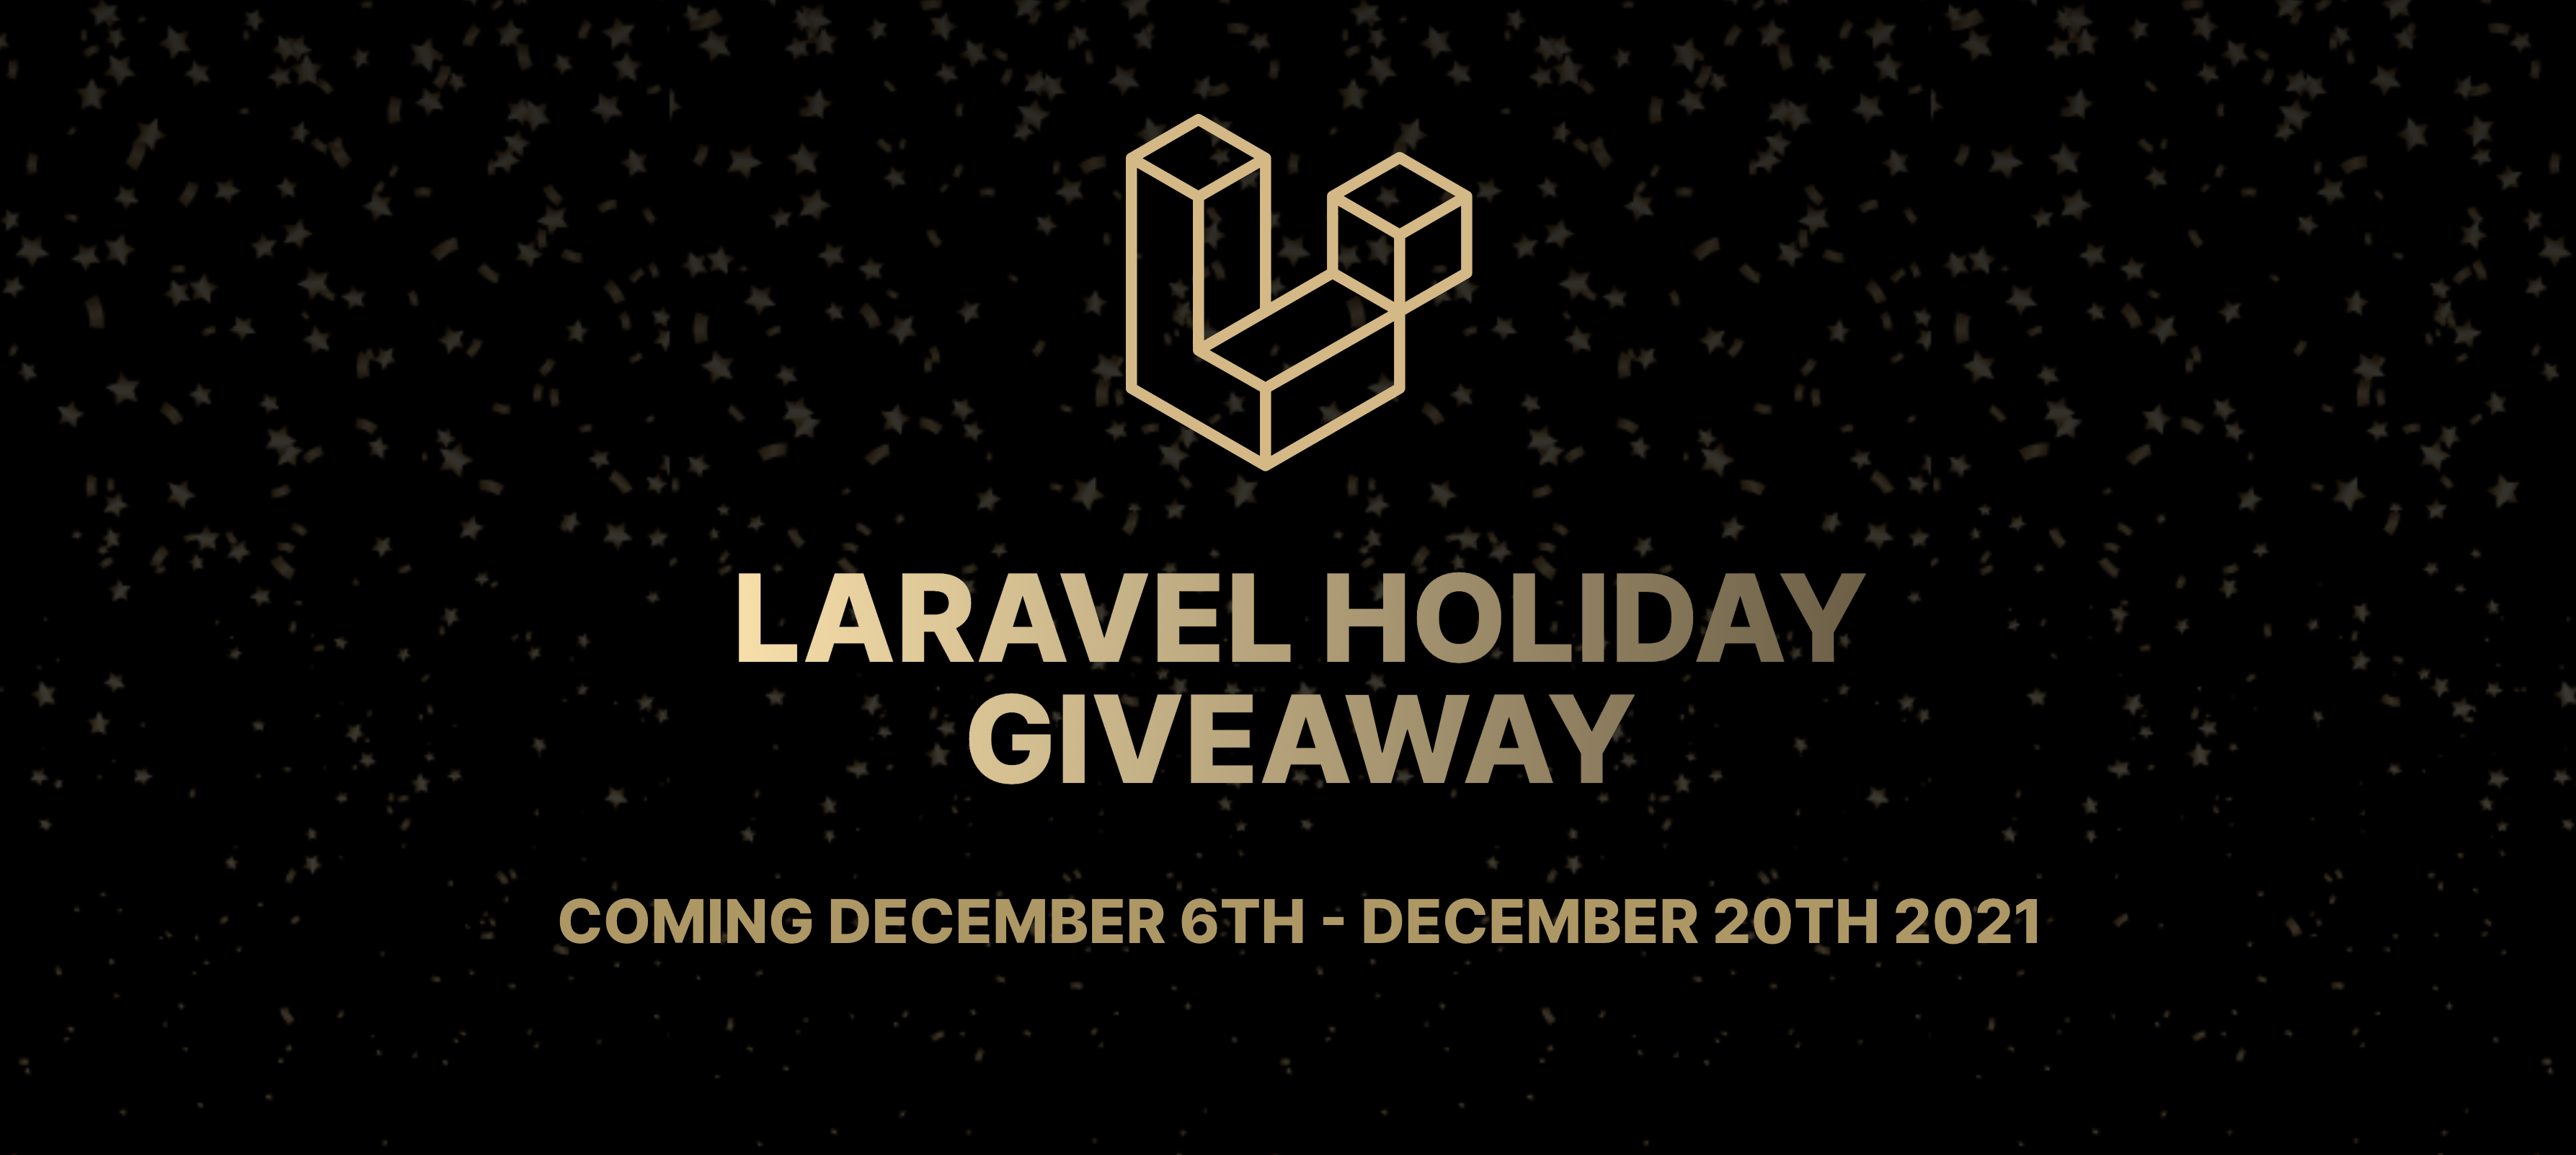 Laravel Holiday Giveaway 2021